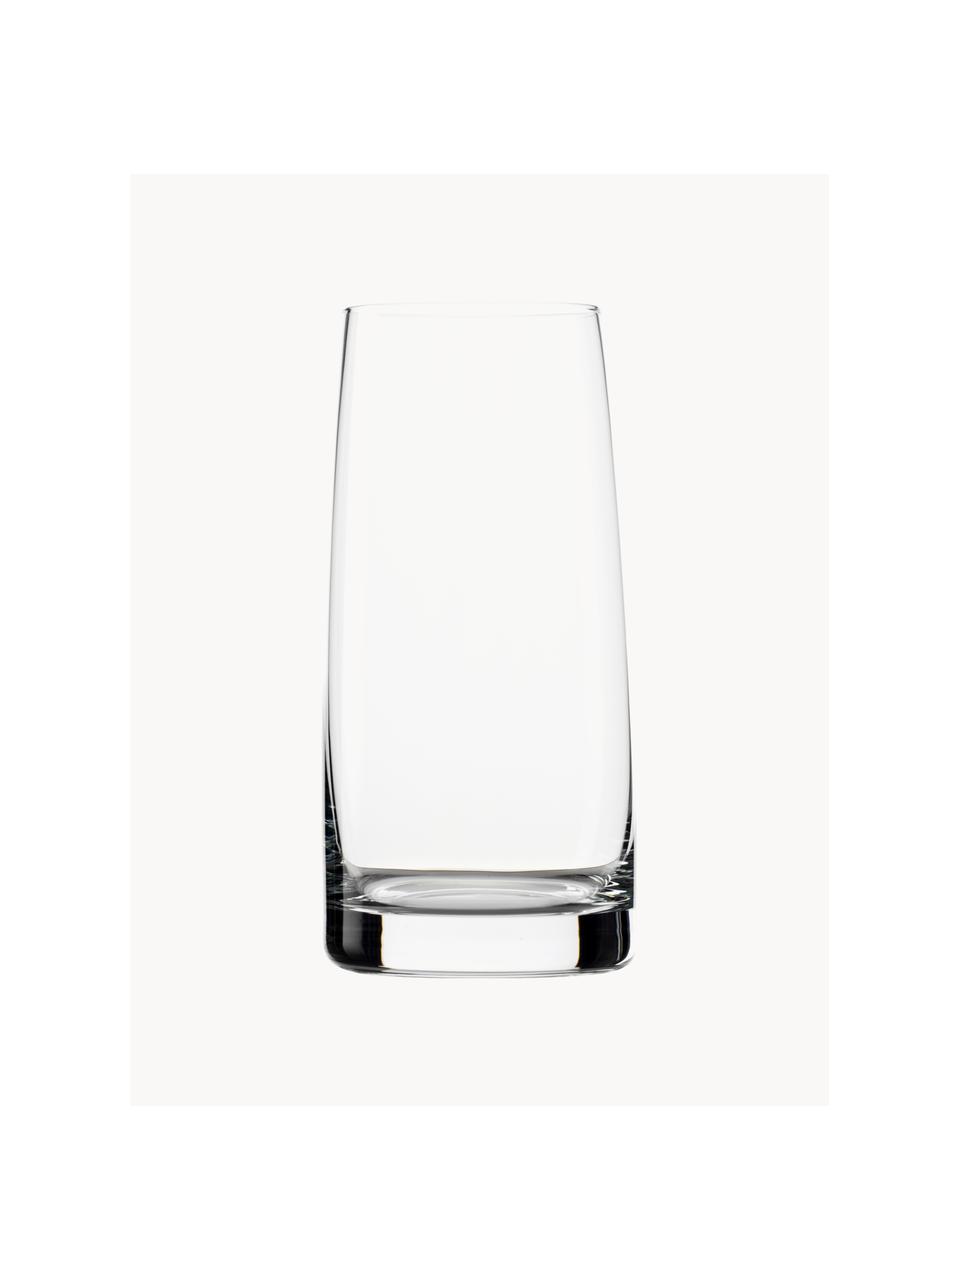 Hohe Kristall-Gläser Experience, 6 Stück, Kristallglas, Transparent, Ø 7 x H 14 cm, 360 ml